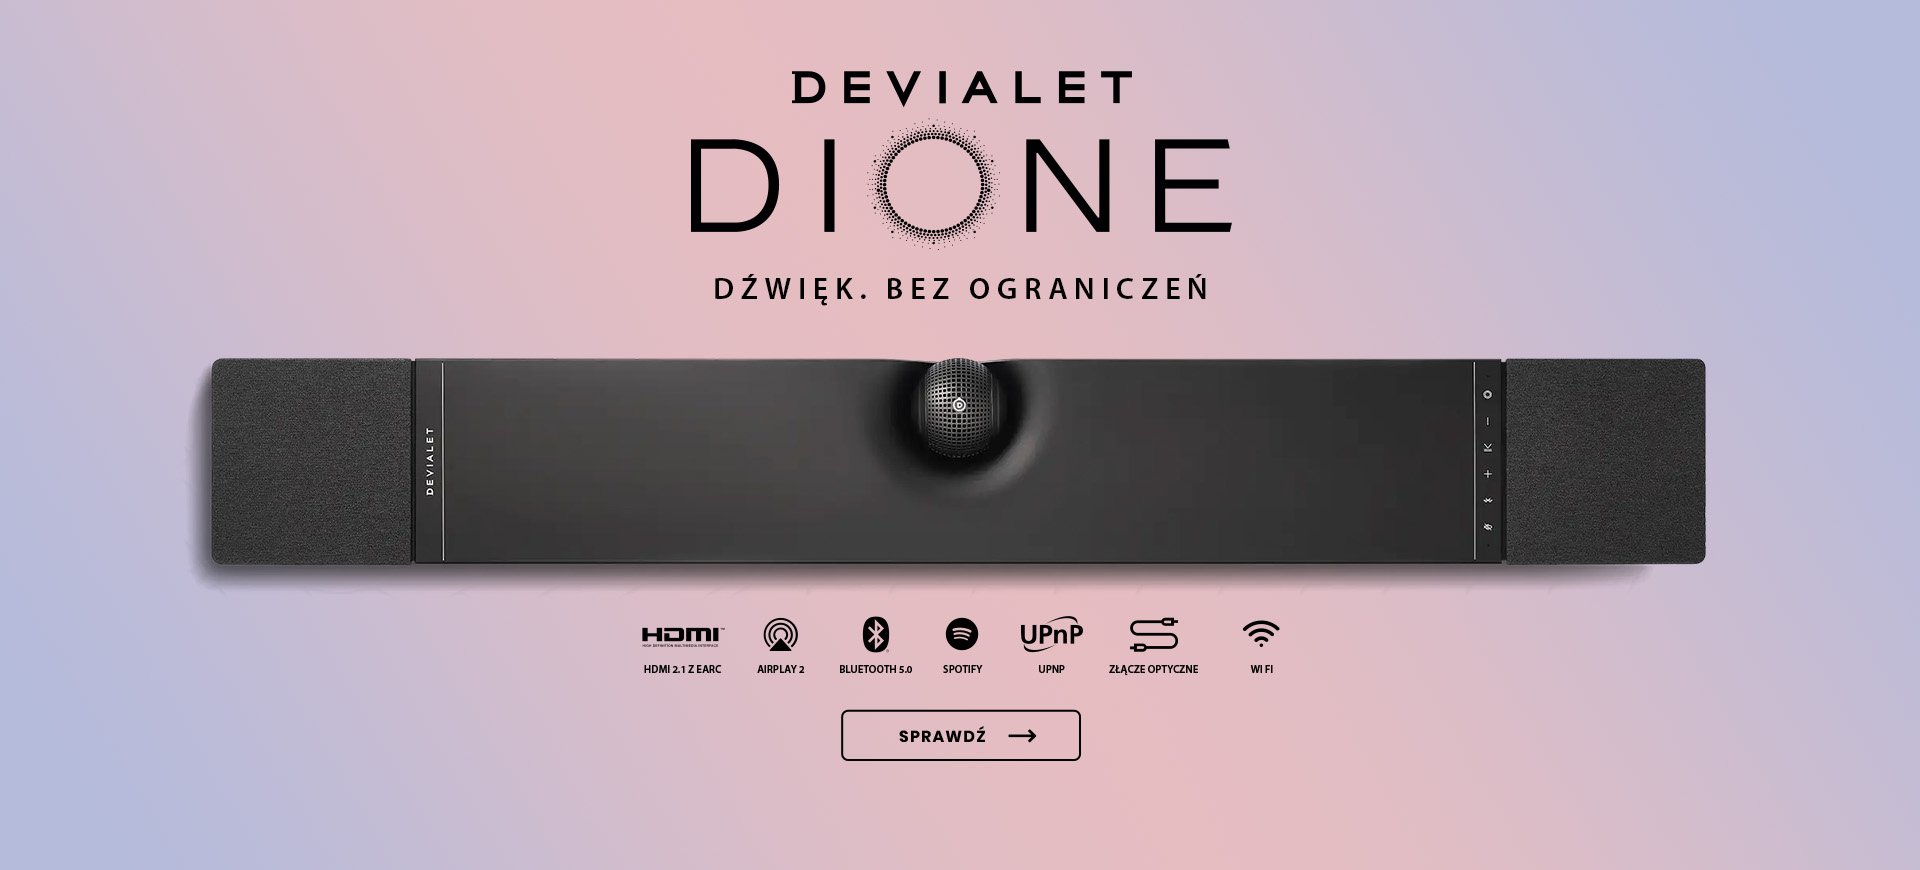 Devialet Dione